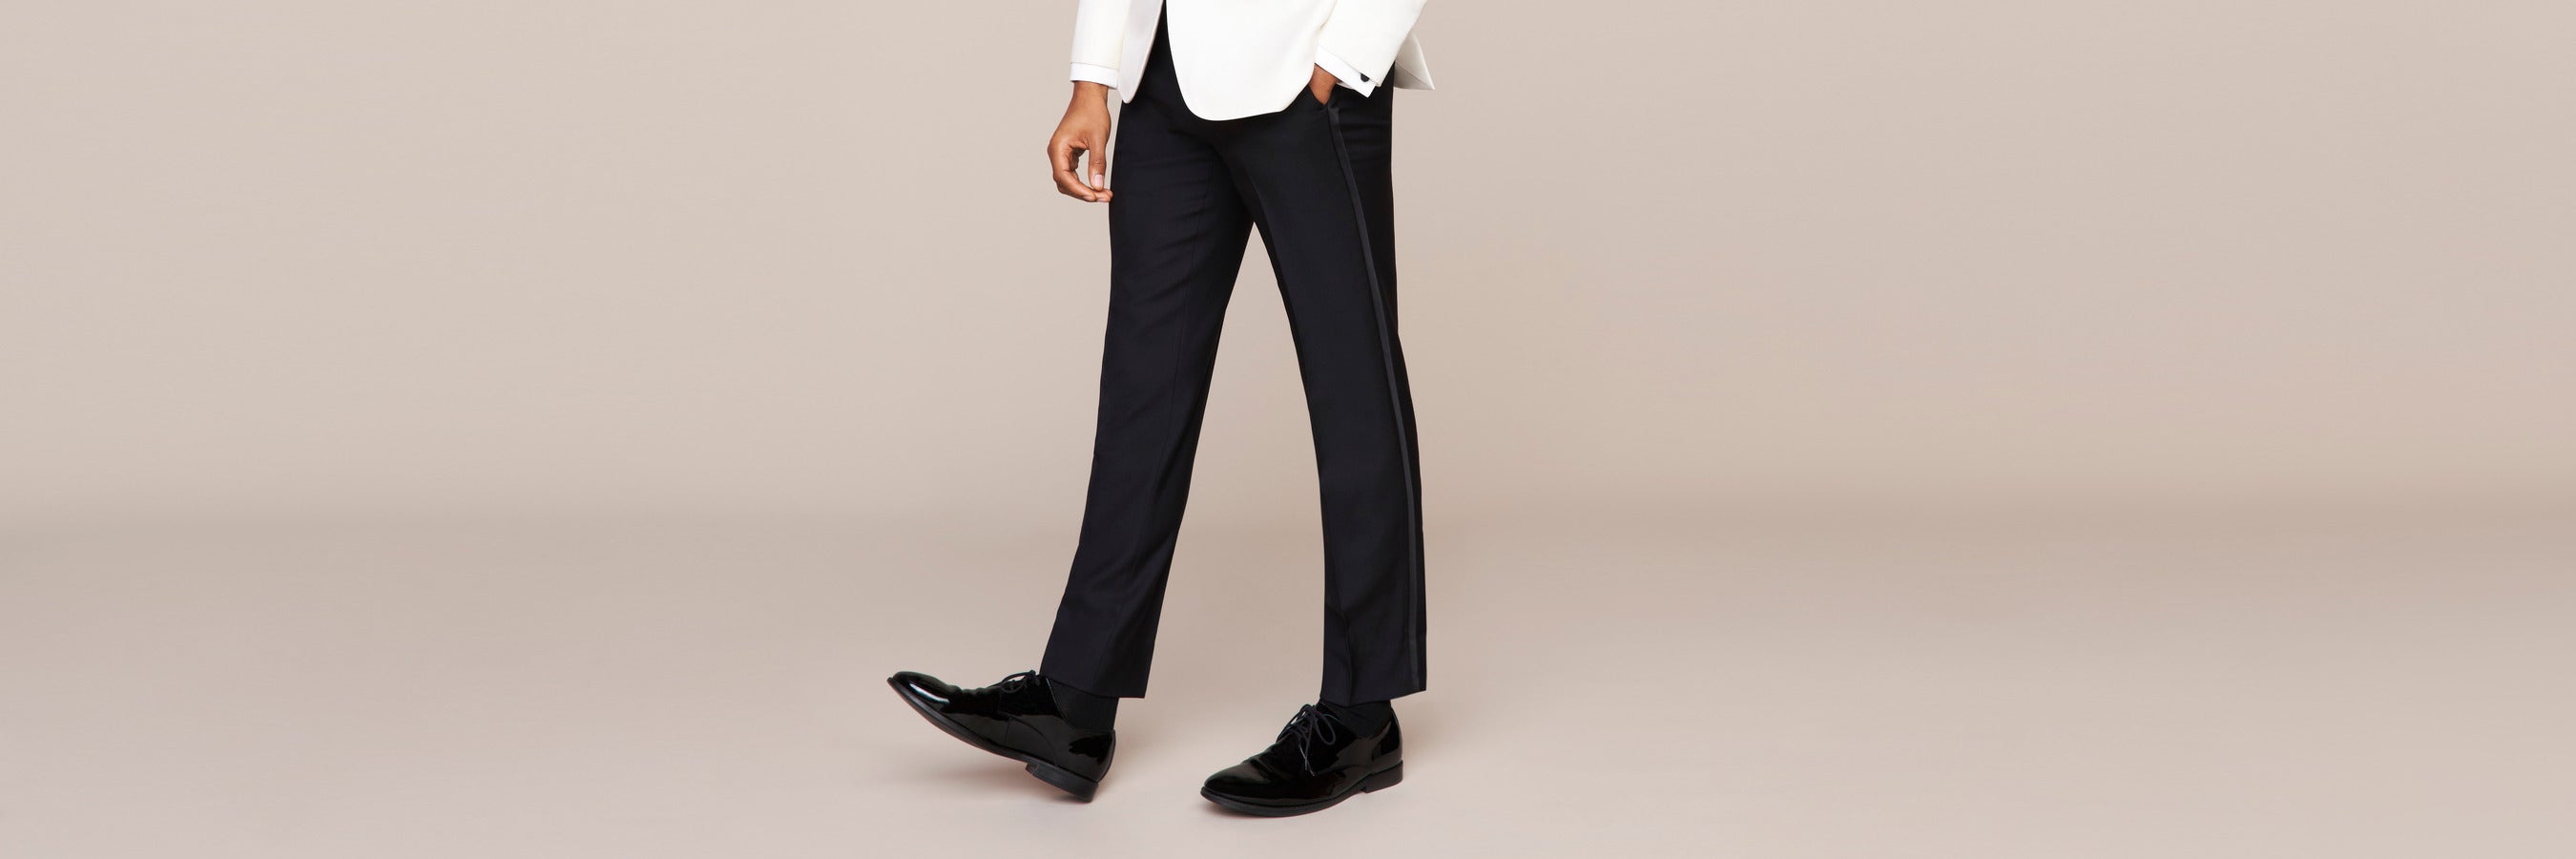 Black Tuxedo Pants  Suits for Weddings & Events